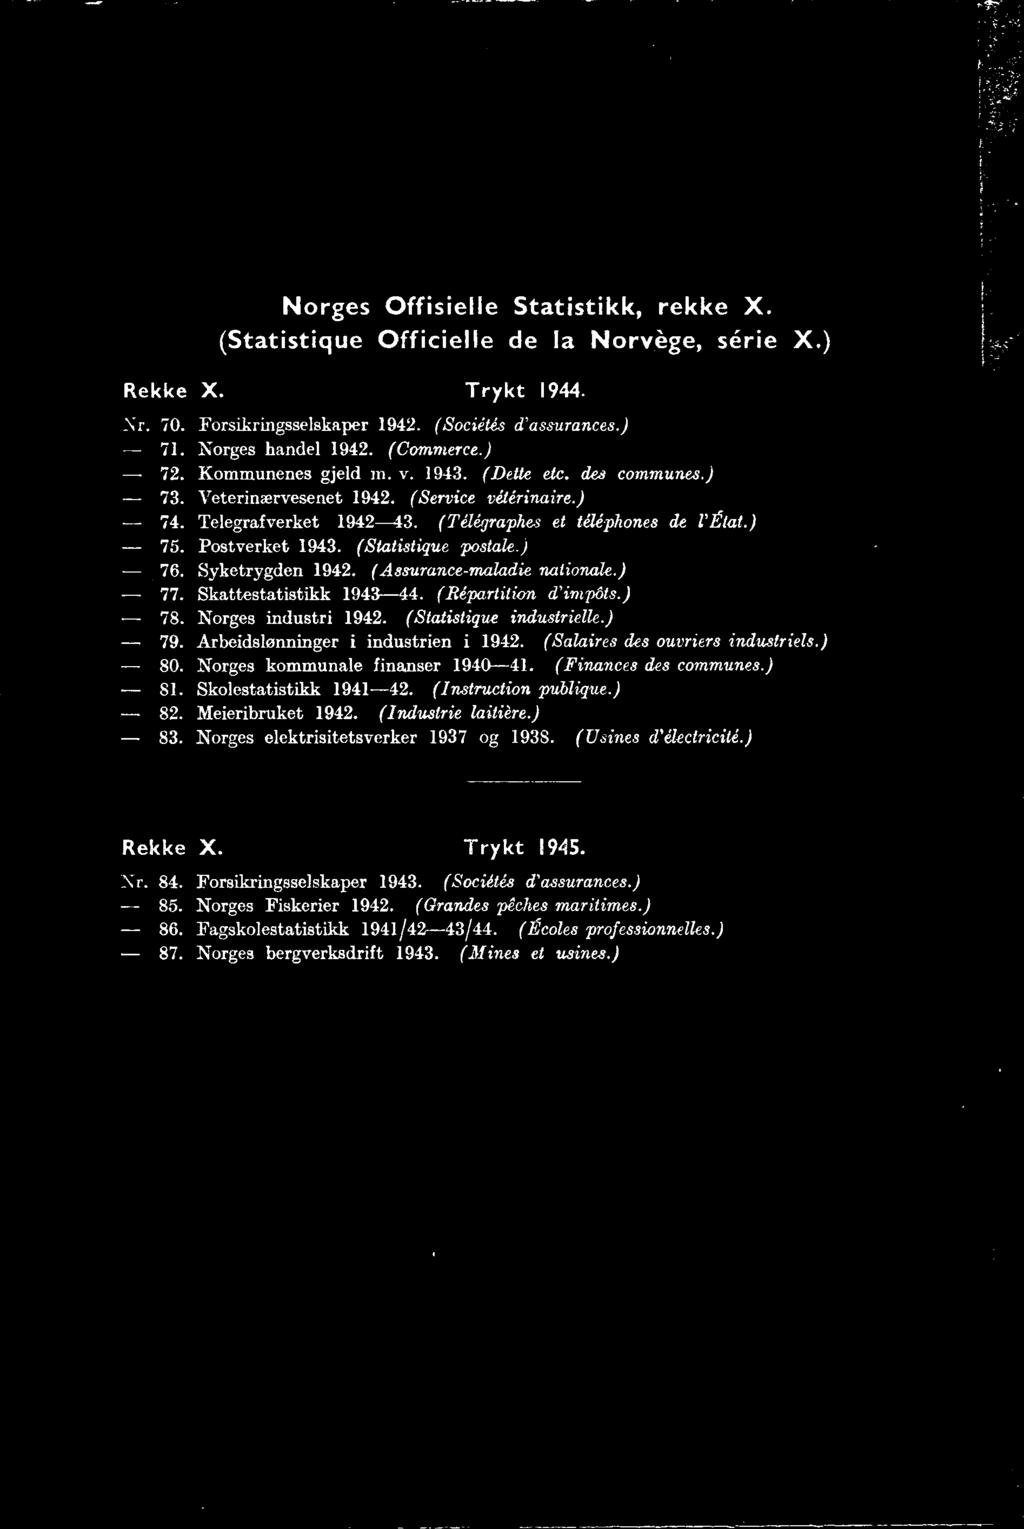 Skolestatistikk 1941-42. (Instruction publique.) - 82. Meieribruket 1942. (Industrie laitière.) - 83. Norges elektrisitetsverker 1937 og 1938. (Usines d'électricité.) Rekke X. Trykt 1945. Nr. 84.